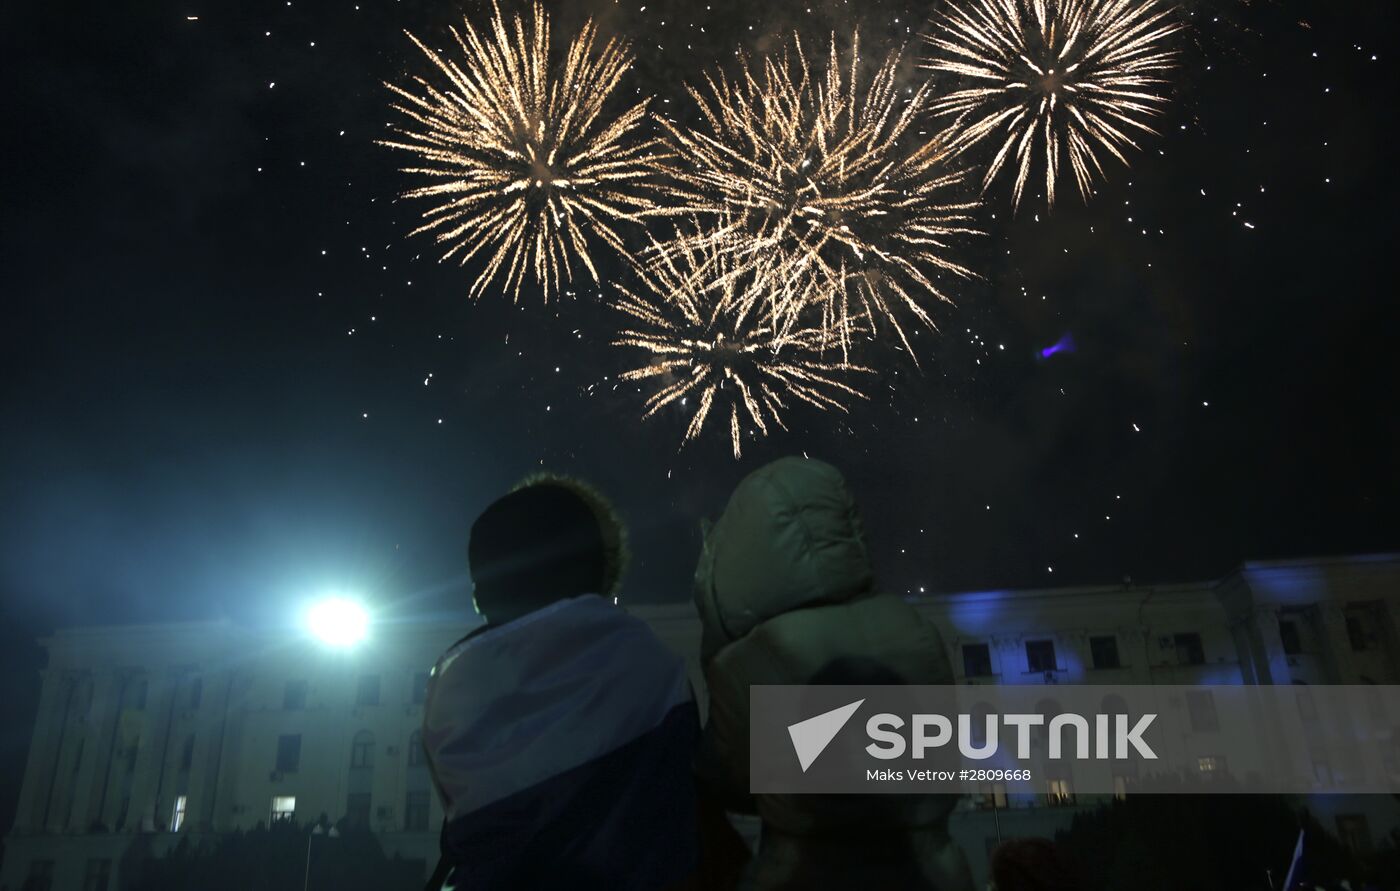 Crimea celebrates Reunification with Russia